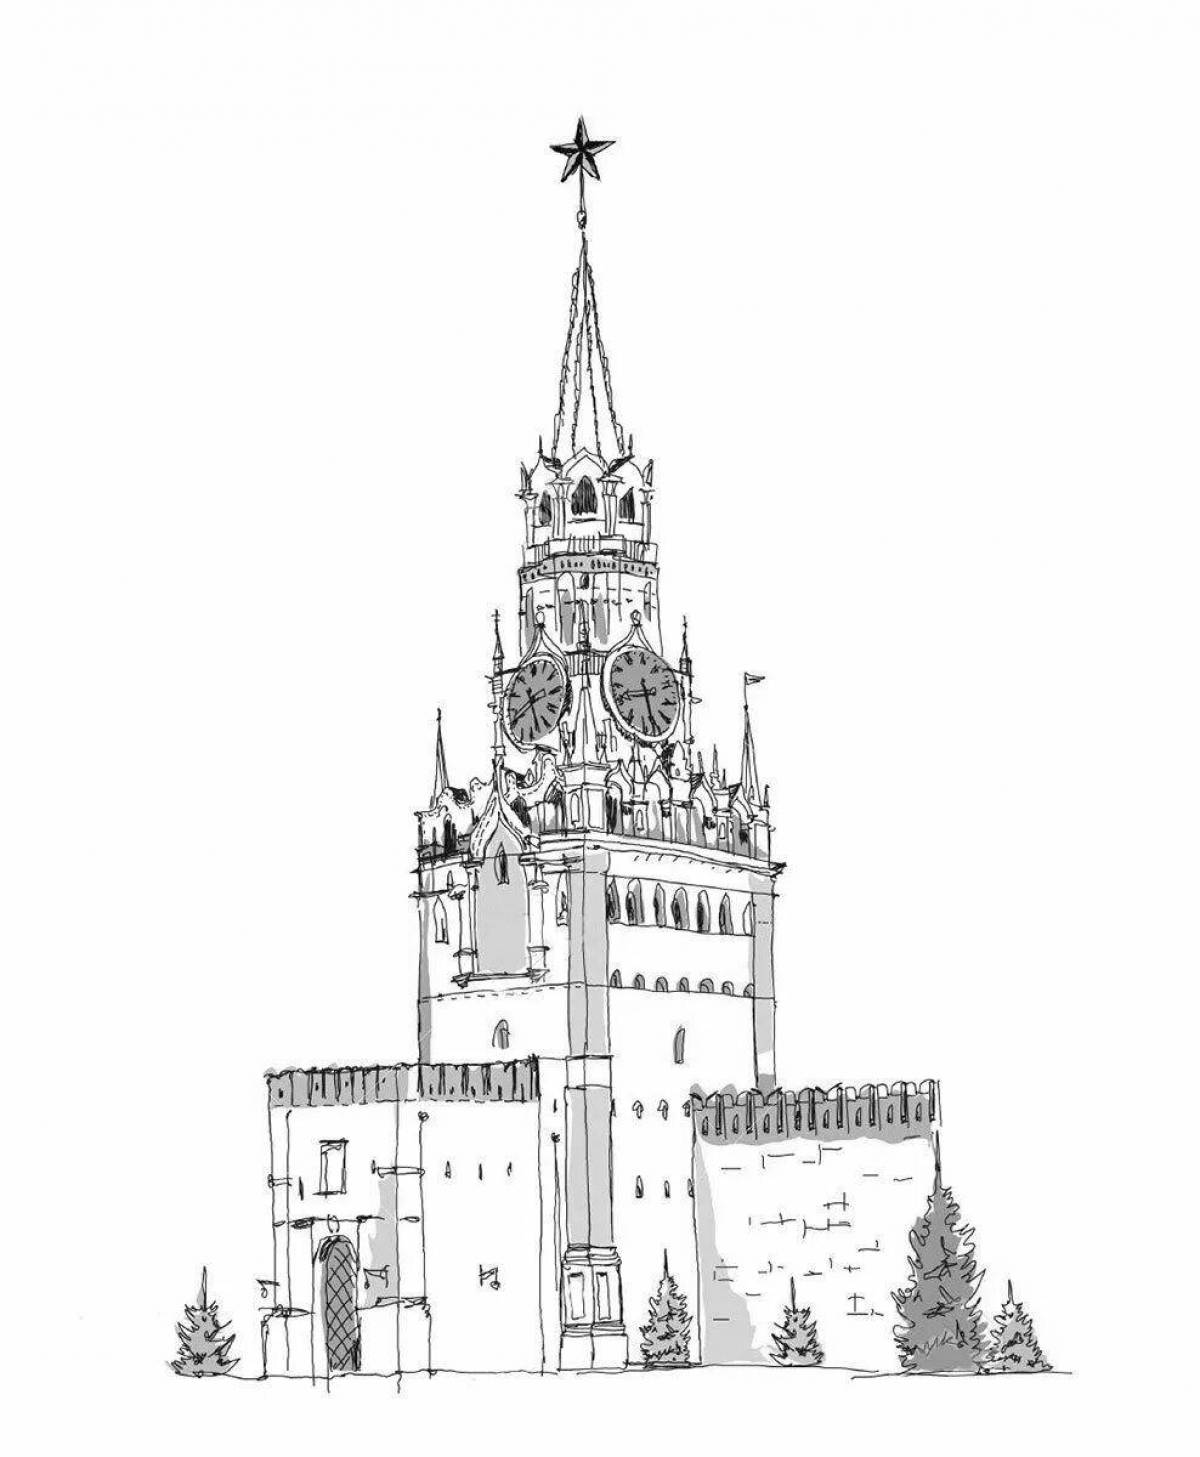 Impressive painting of the Kremlin